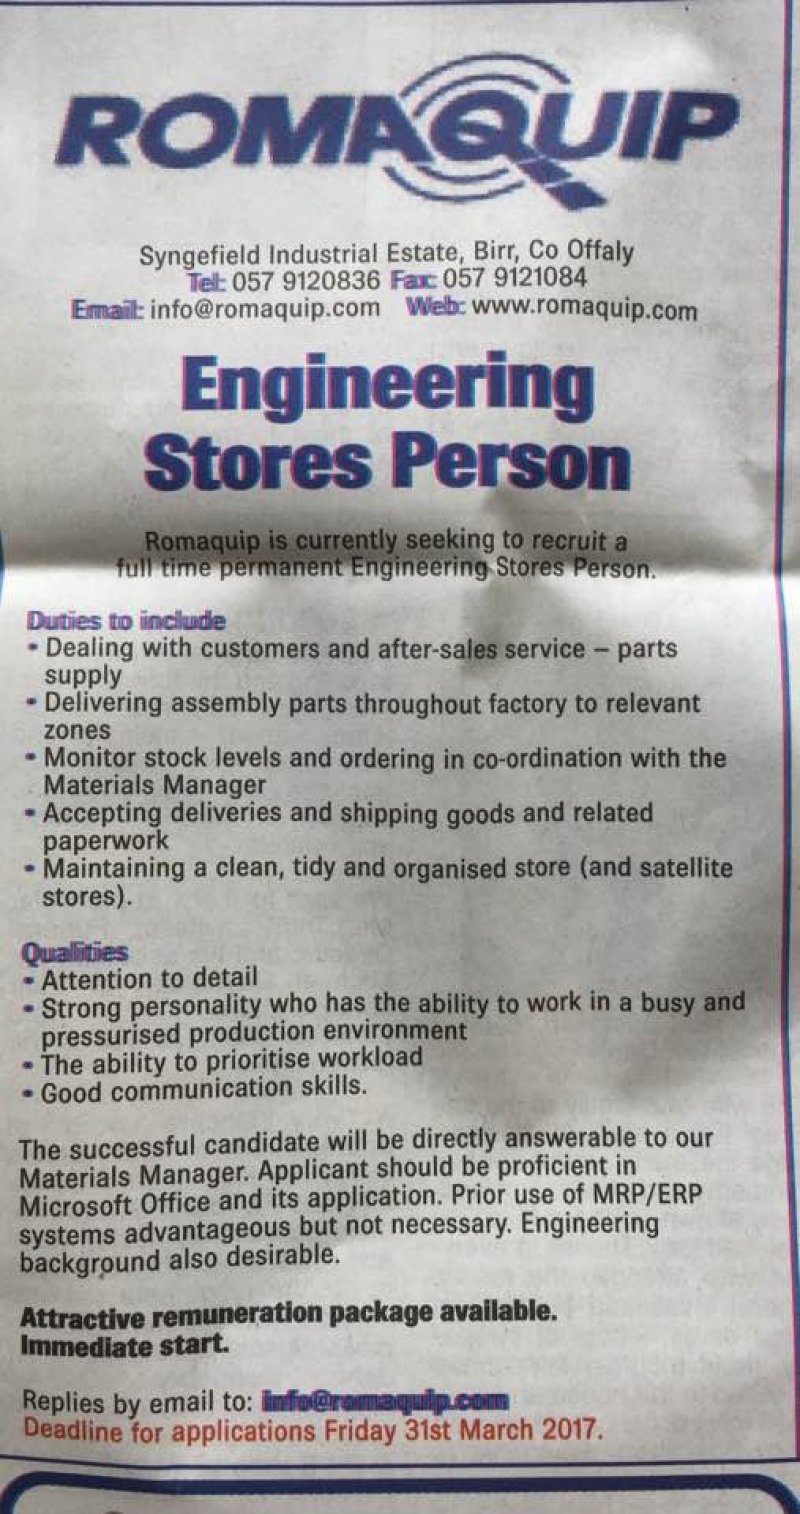 Midland Tribune - Engineering Stores Person